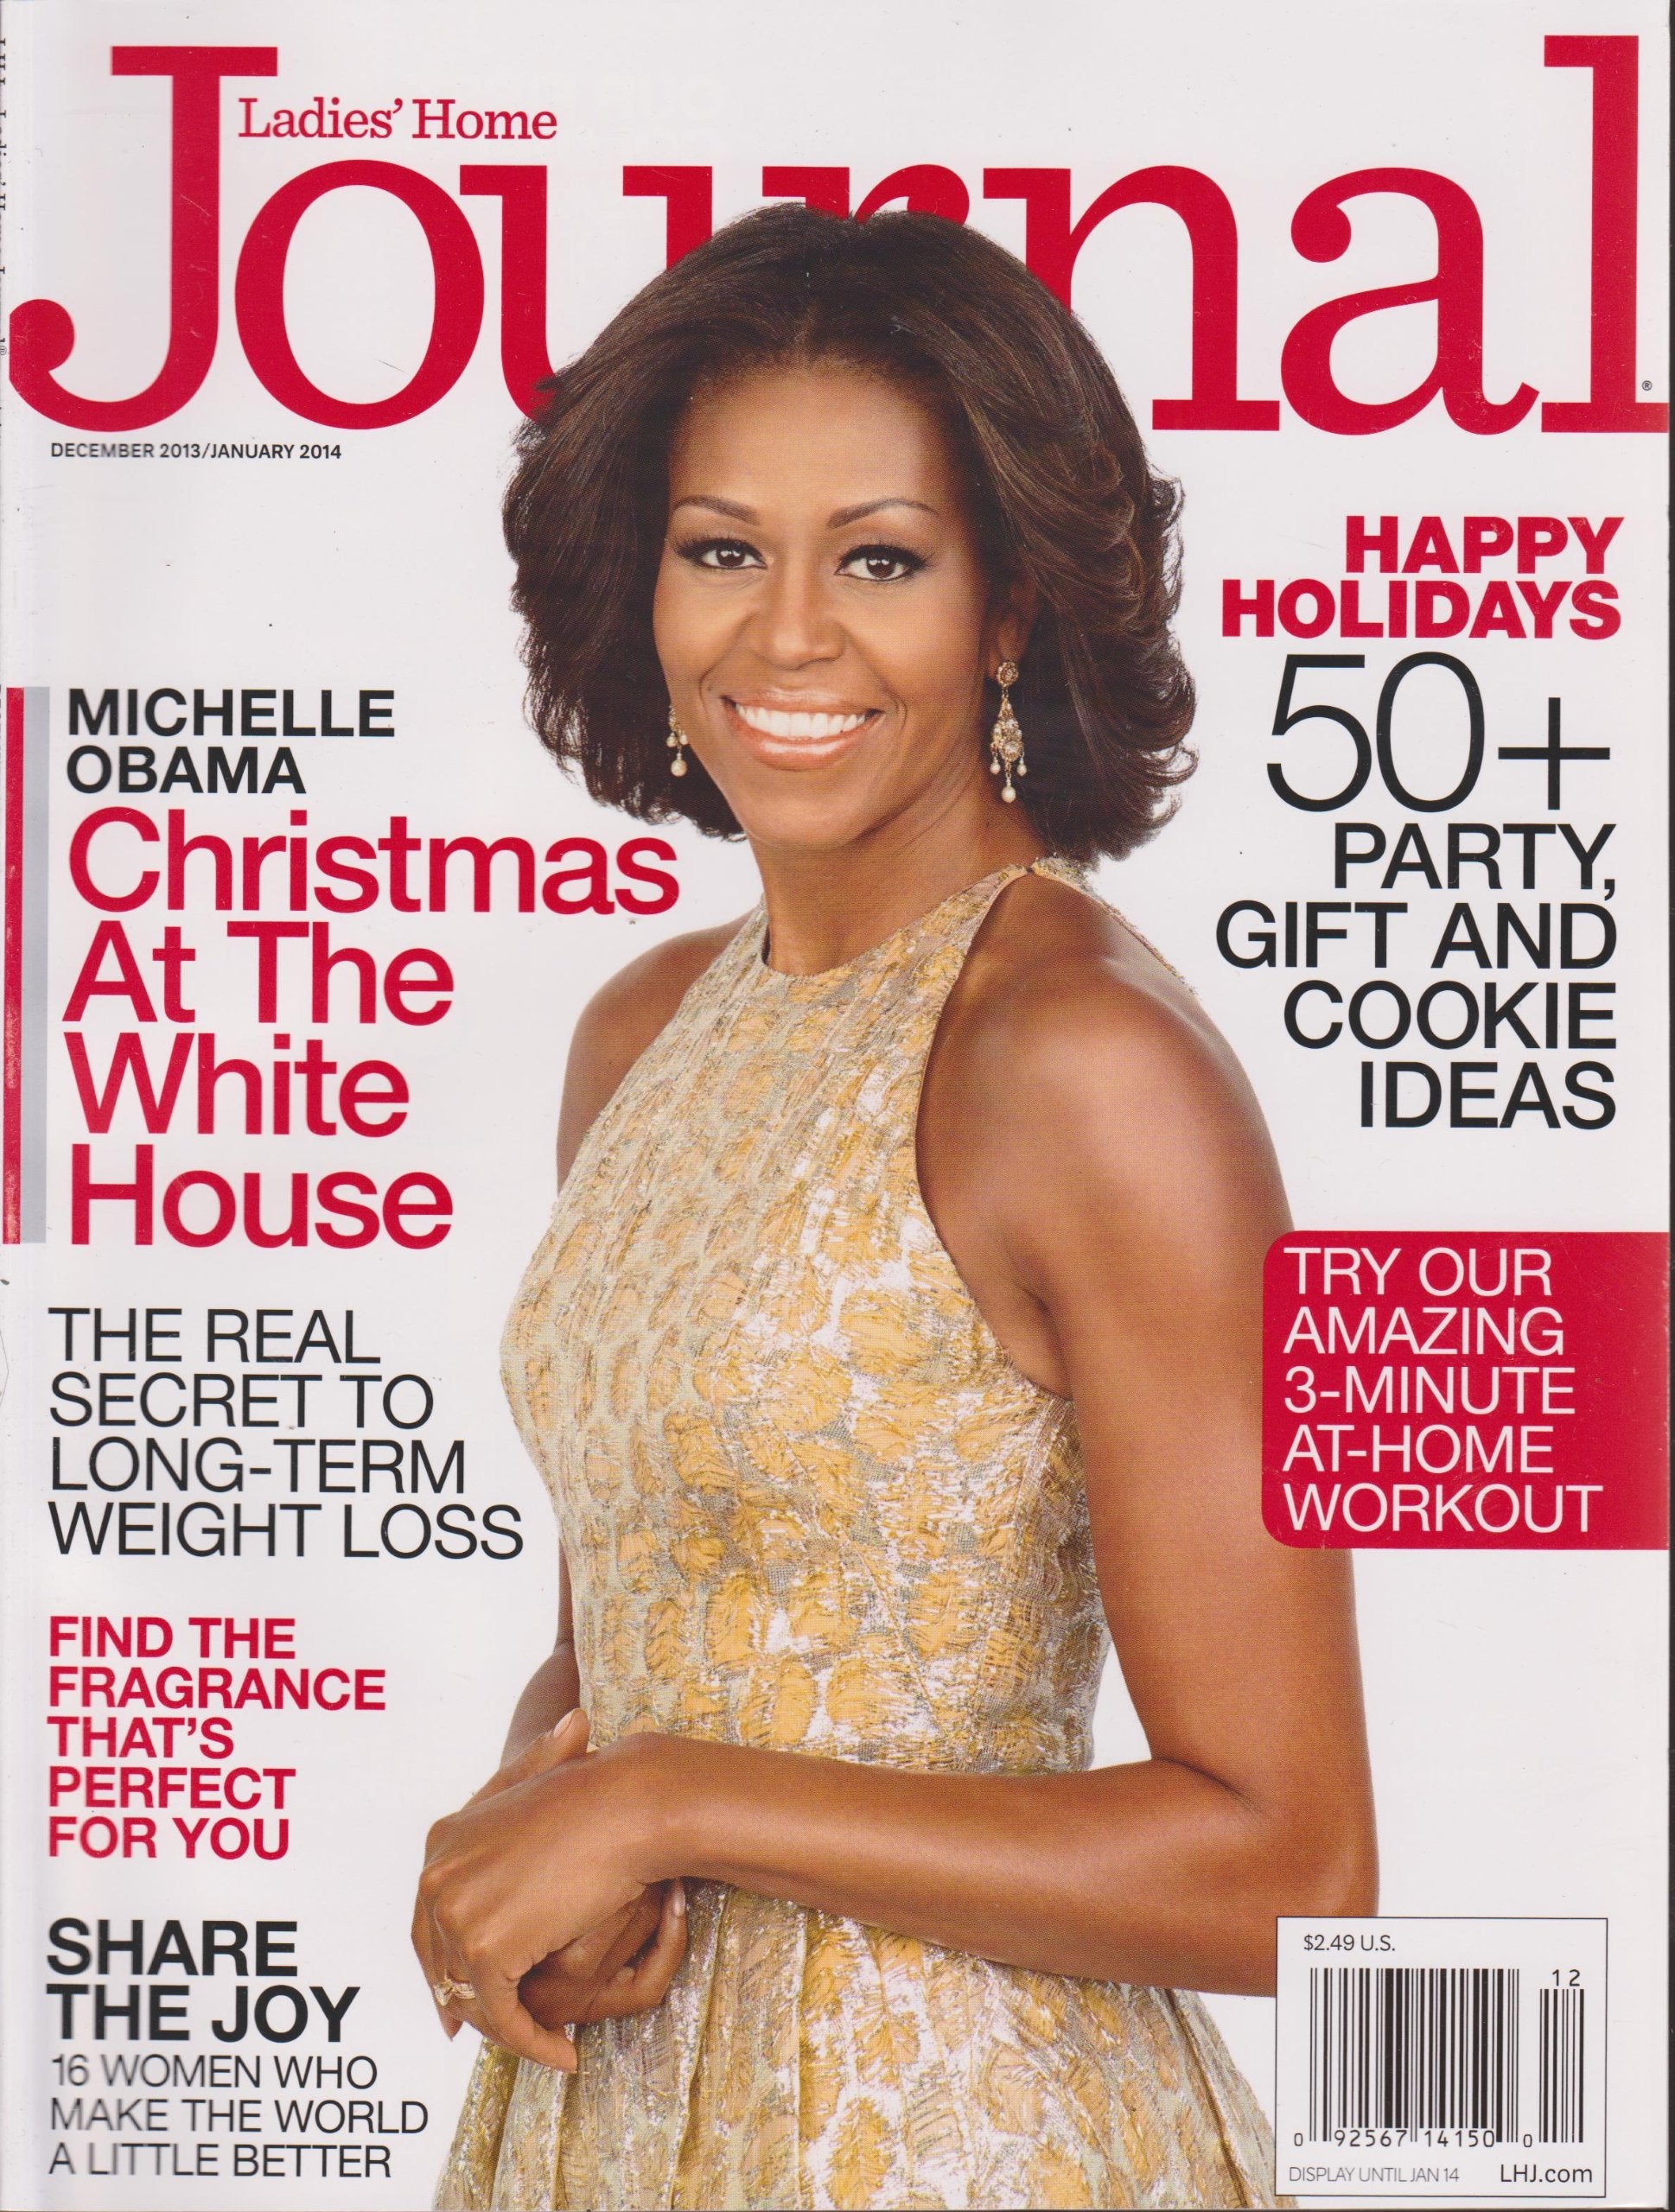 Ladies Home Journal - December 2013 / January 2014